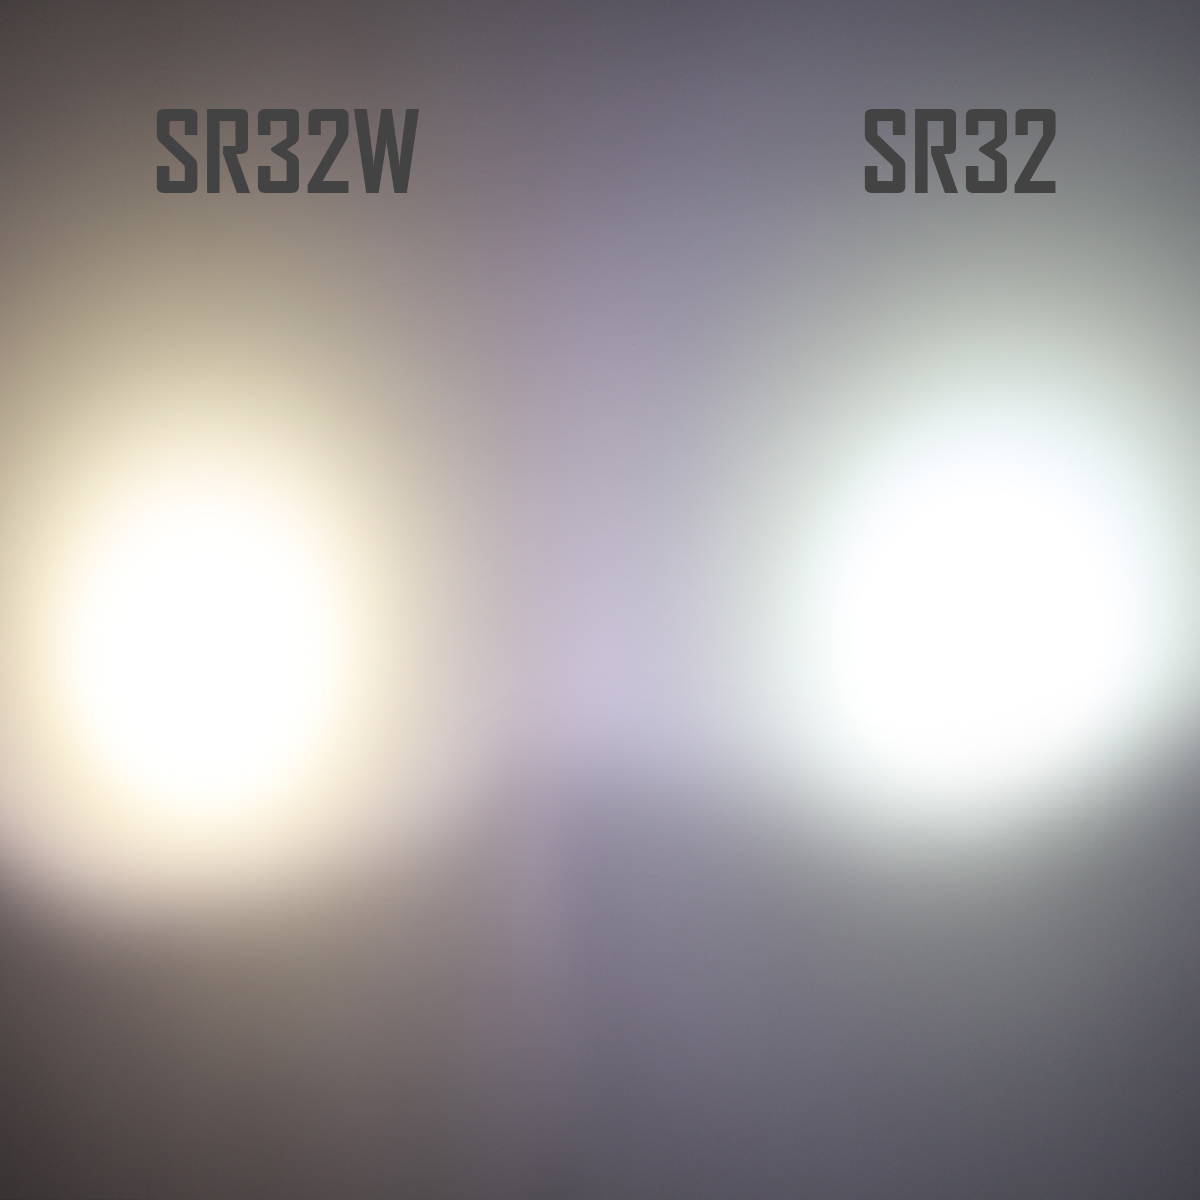 SR32W AND SR32